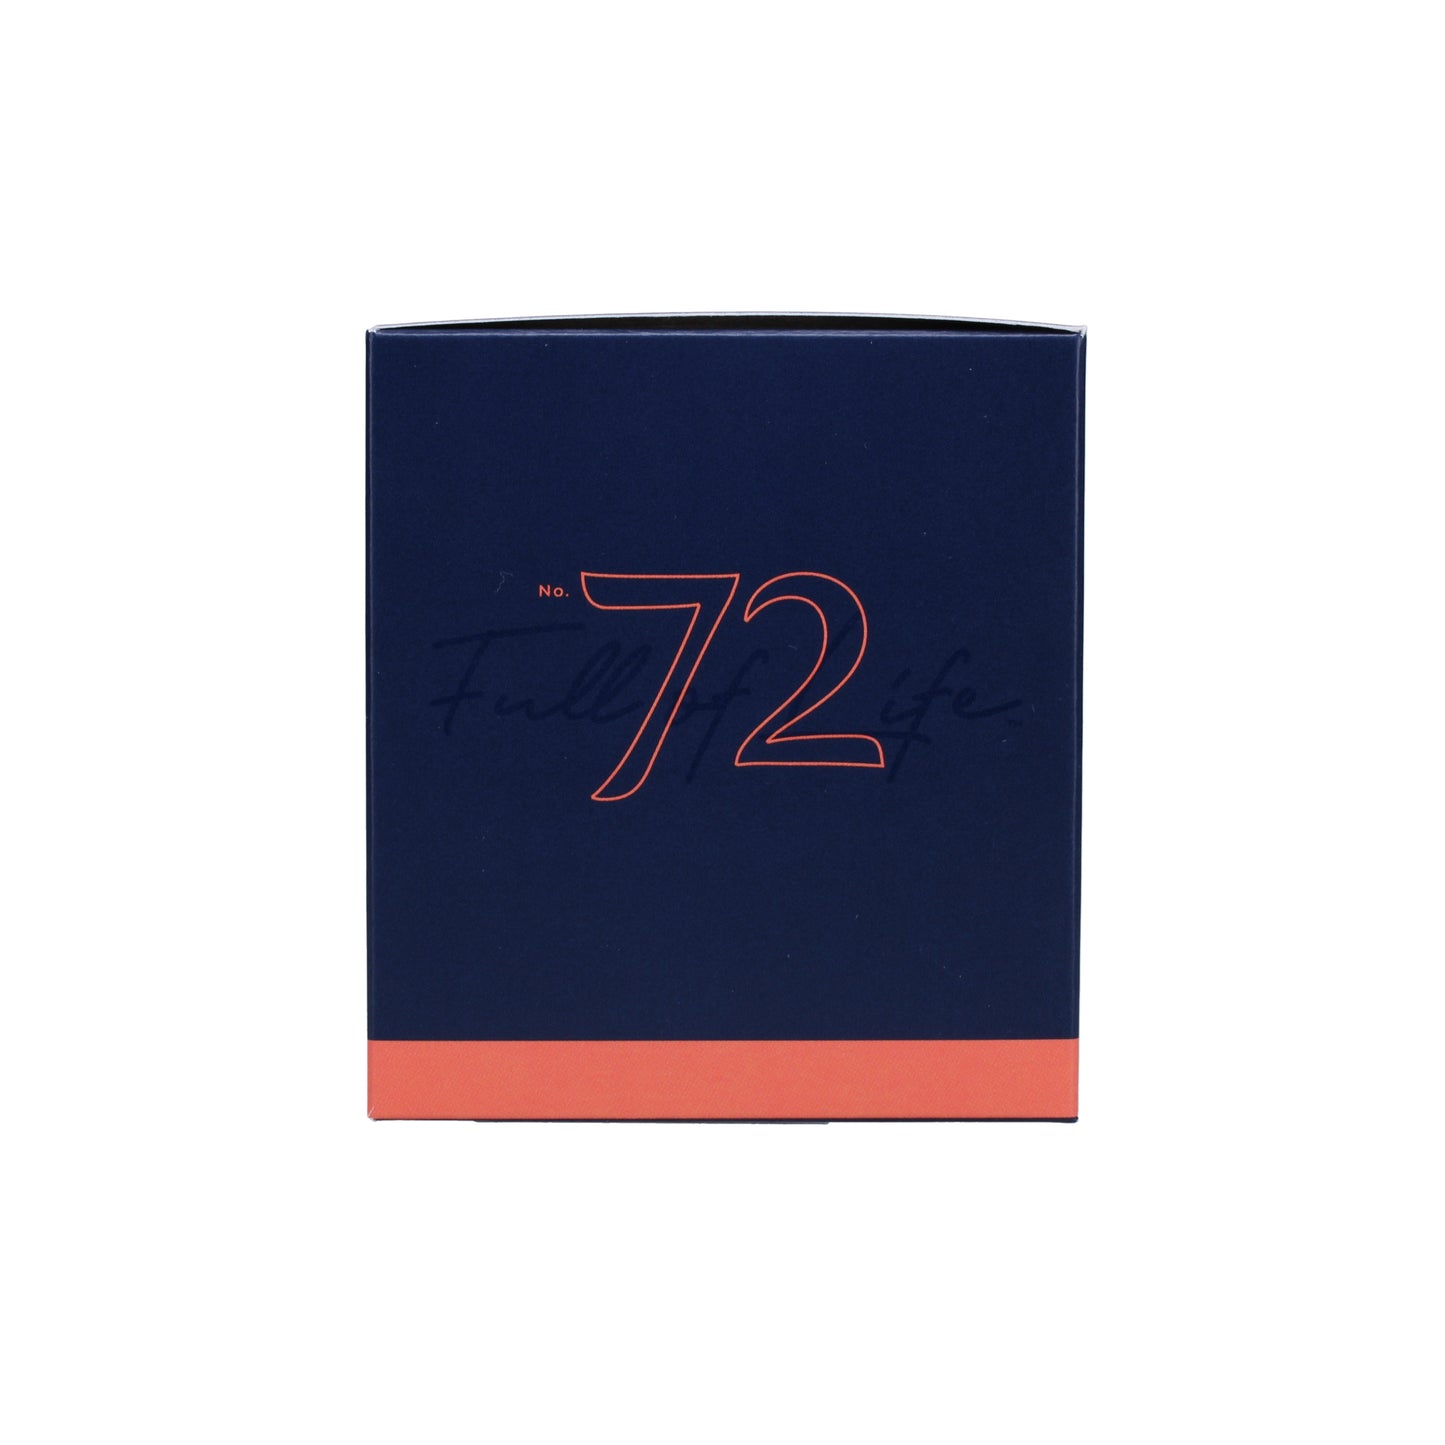 No. 72 Amalfi Citron 7 oz. Candle in Signature Box Image 6